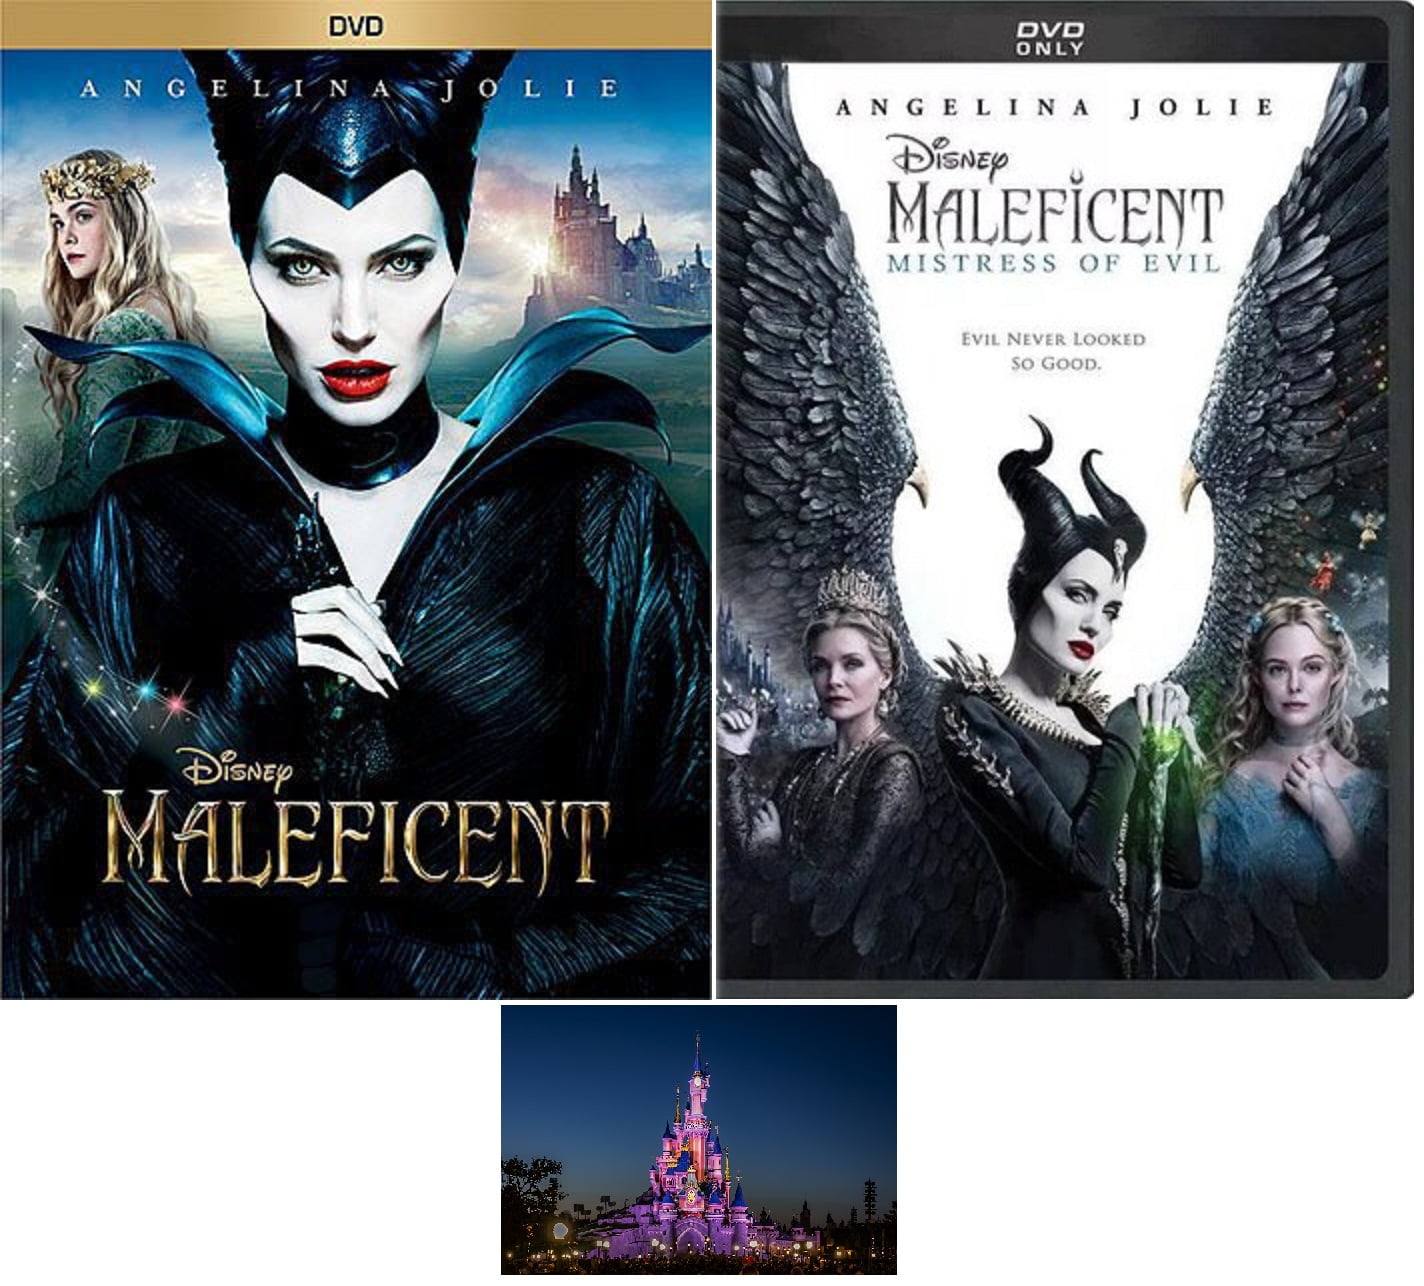 patrulje Gå op region Angelina Jolie Double Feature Maleficent 1 One & 2 Two Mistress of Evil 2  DVD Set Includes Glossy Print Magic Kingdom Art Card - Walmart.com